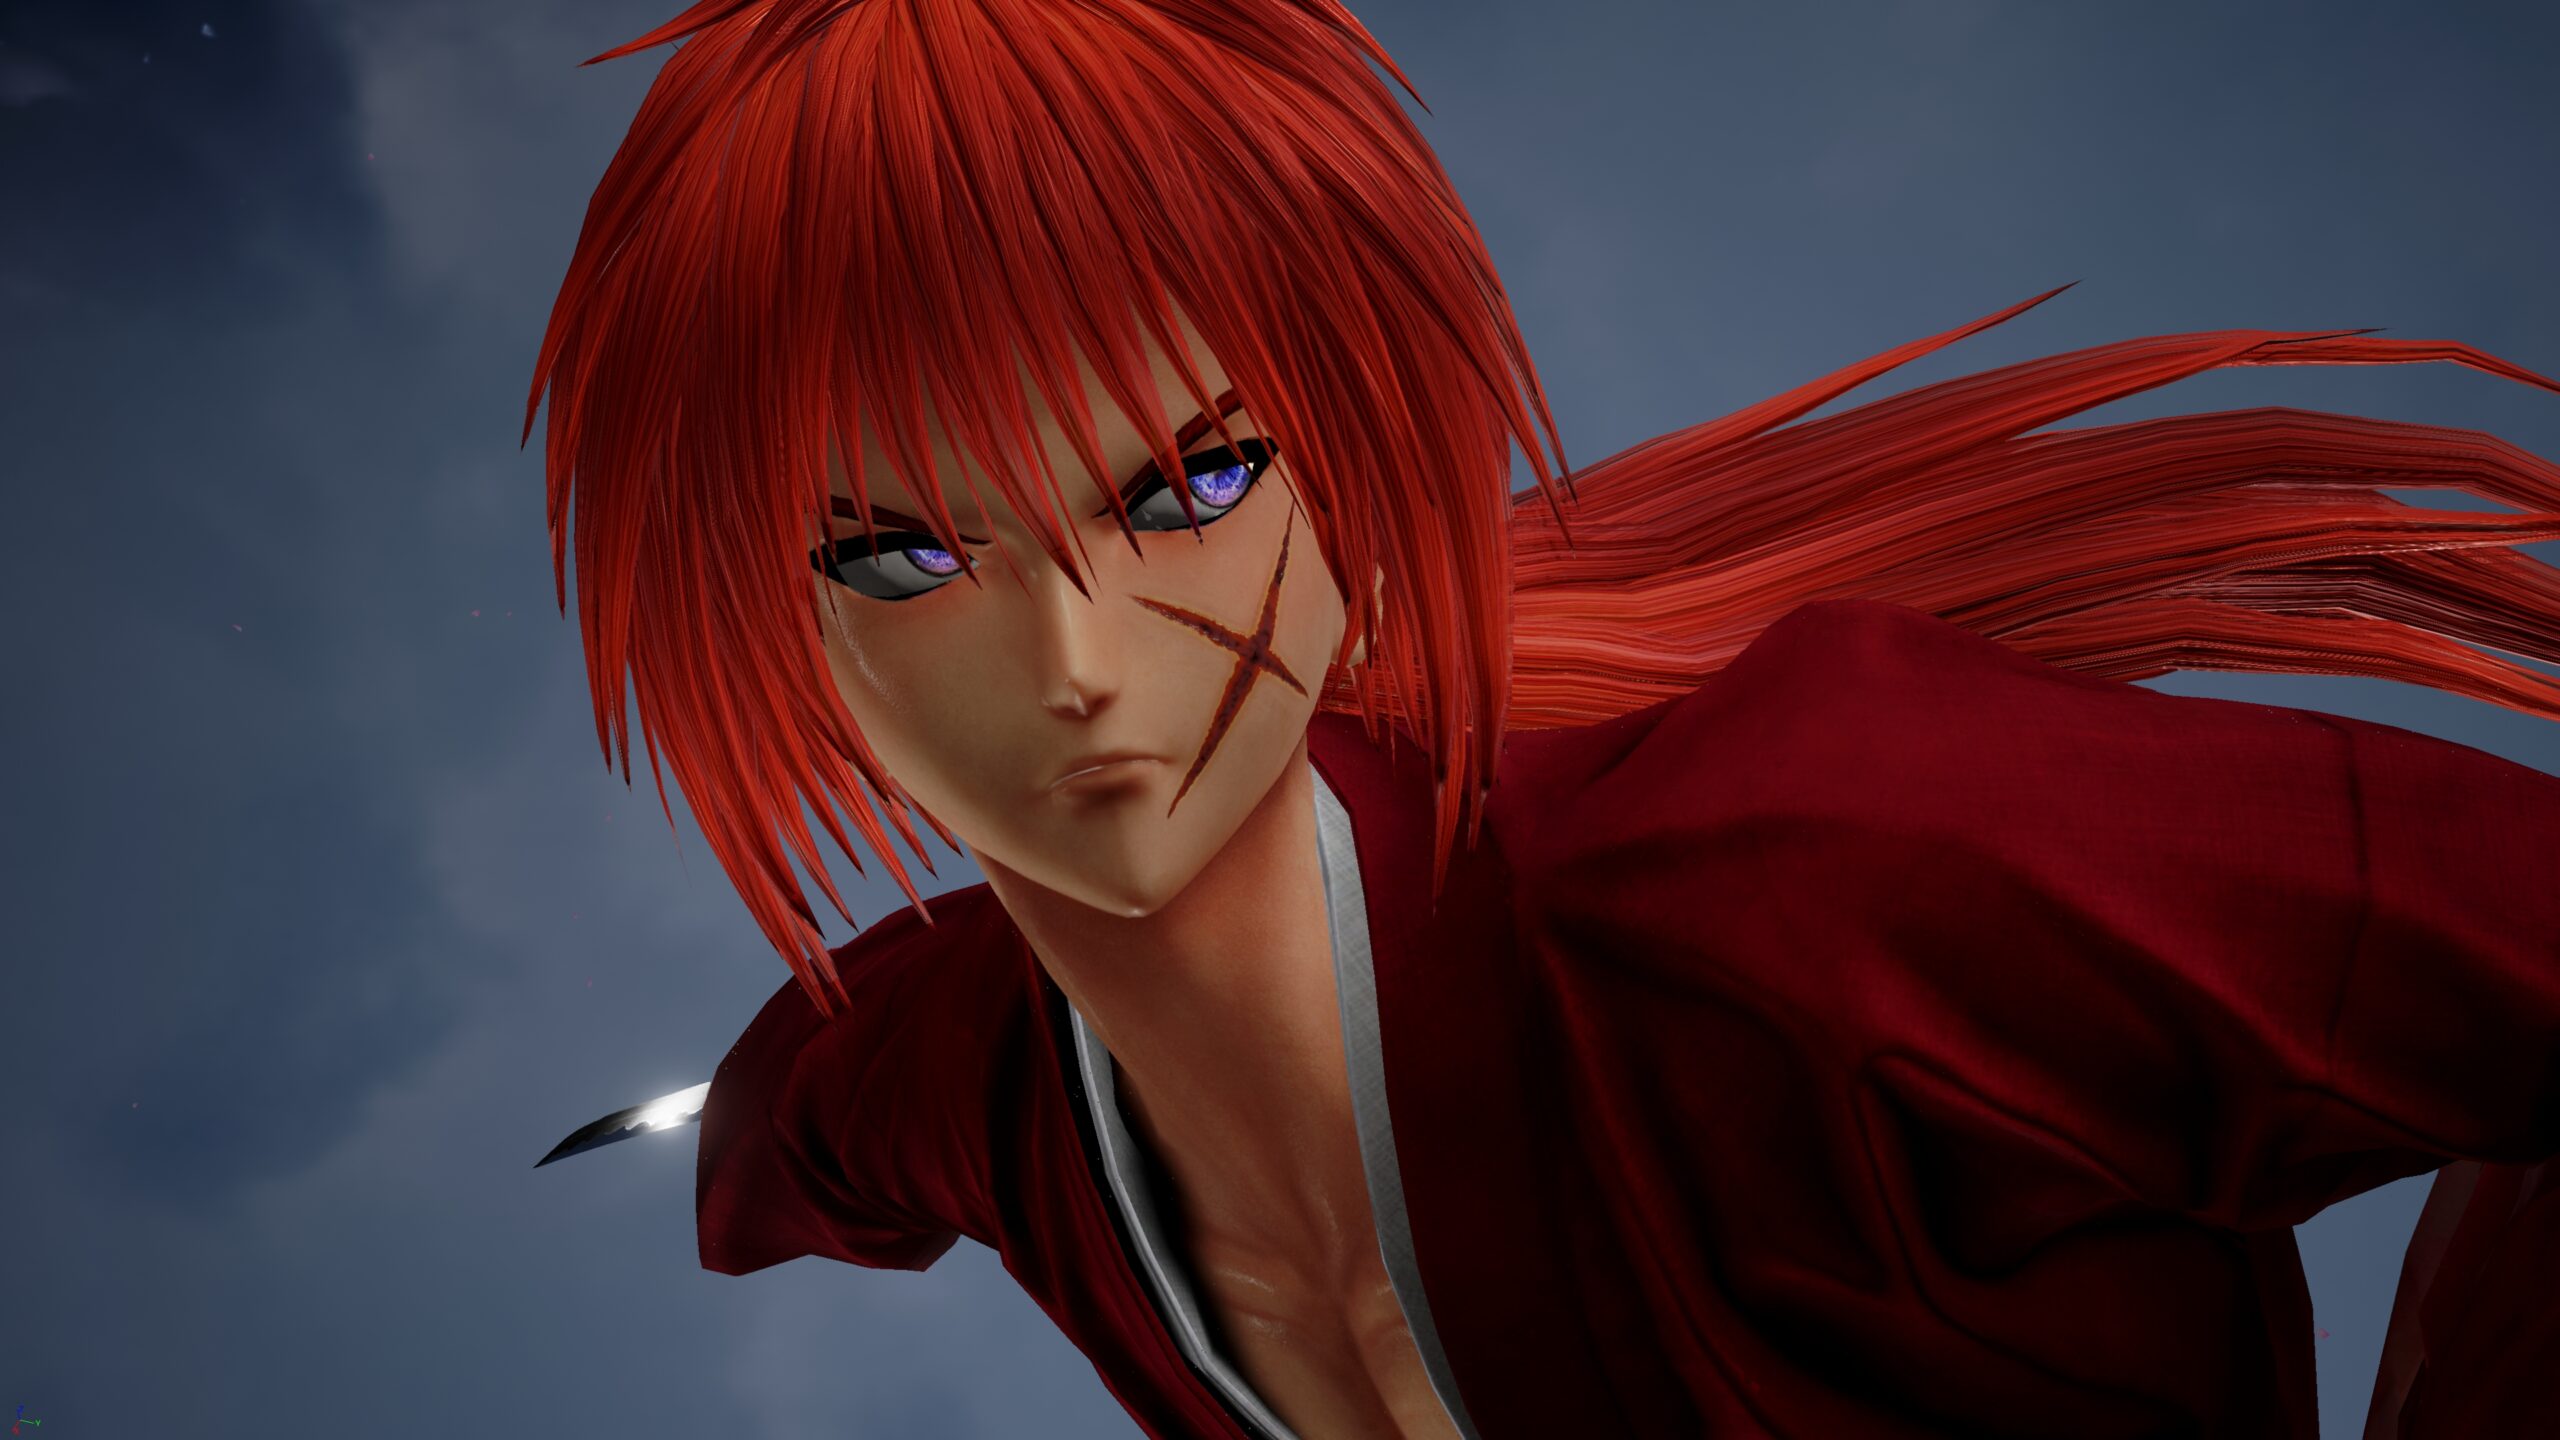 Himura Kenshin, Jump Database